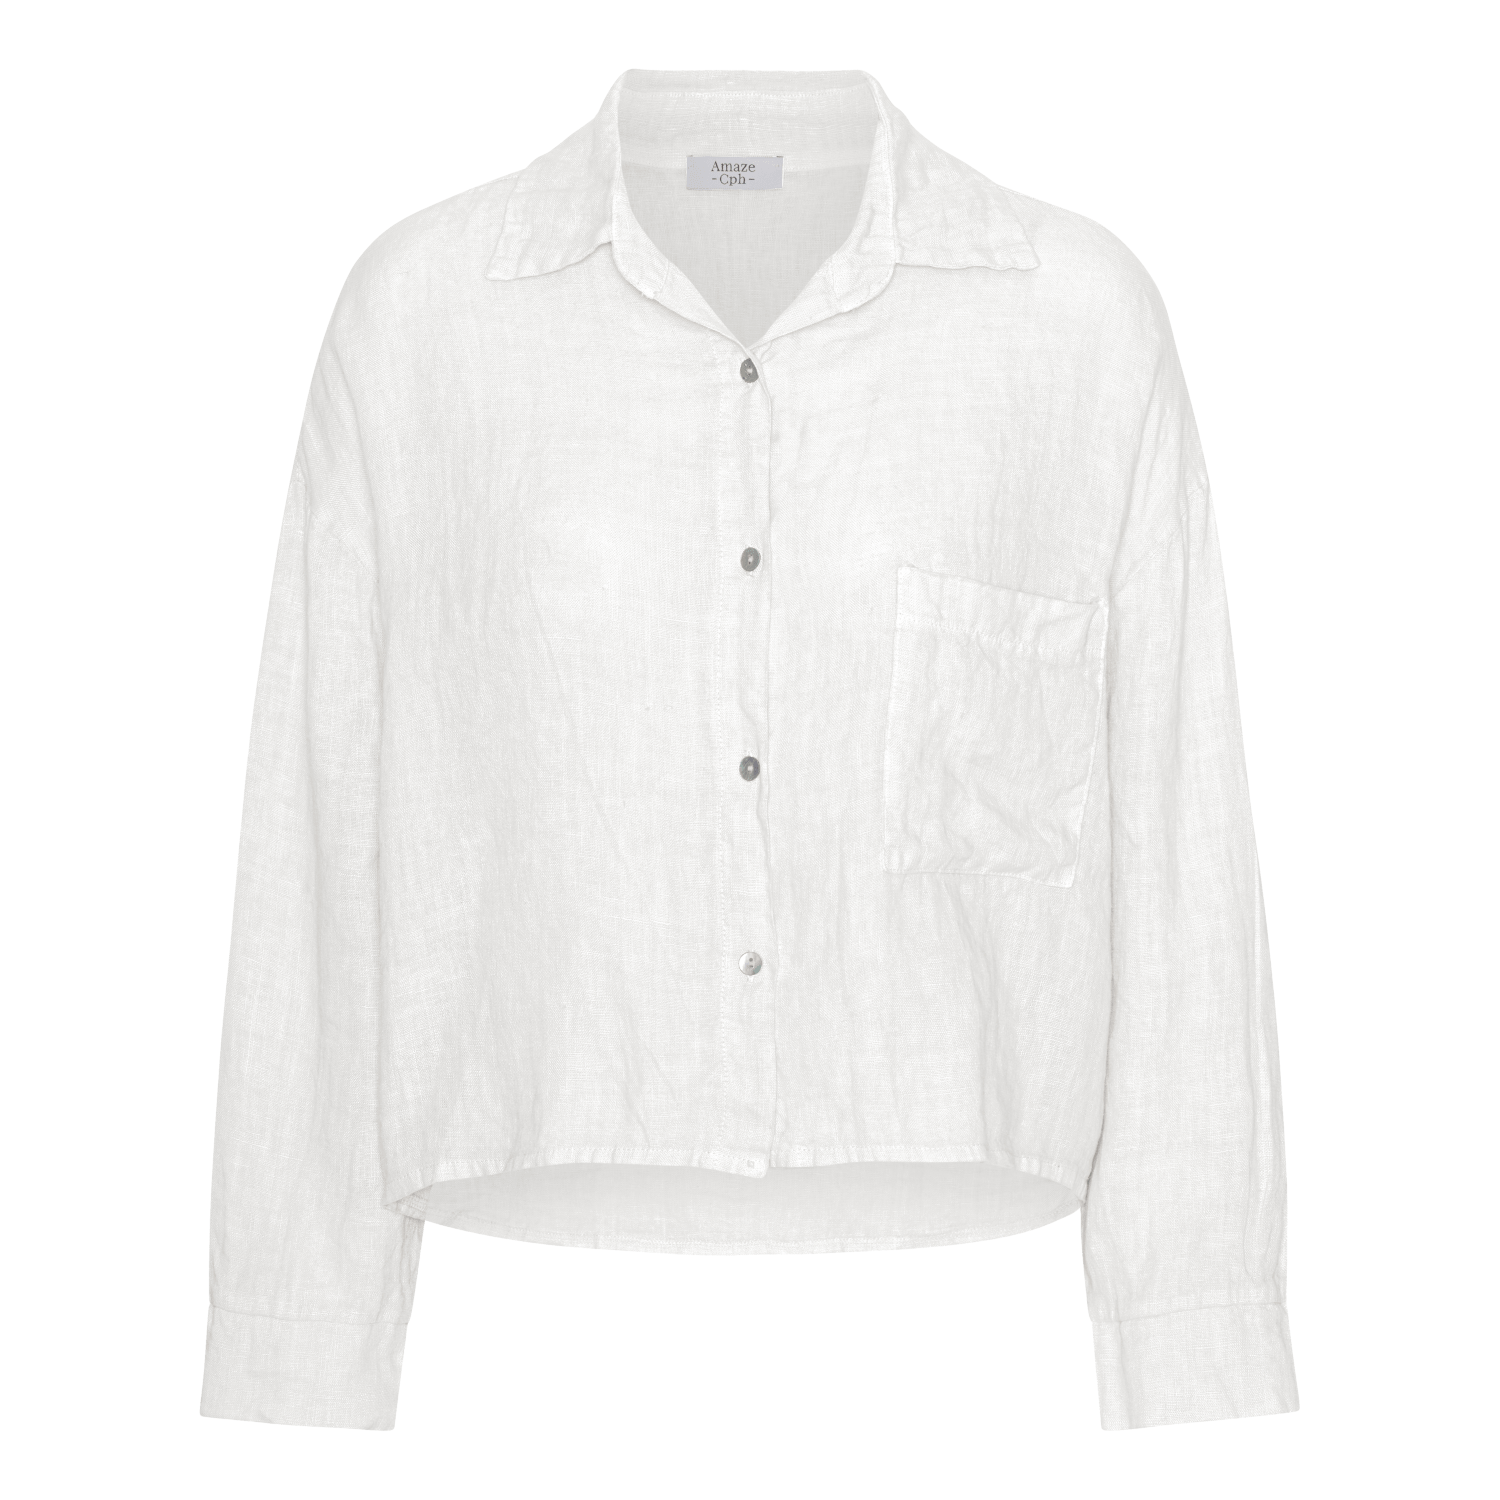 Linen Shirt - White - Amaze Cph - White - One Size